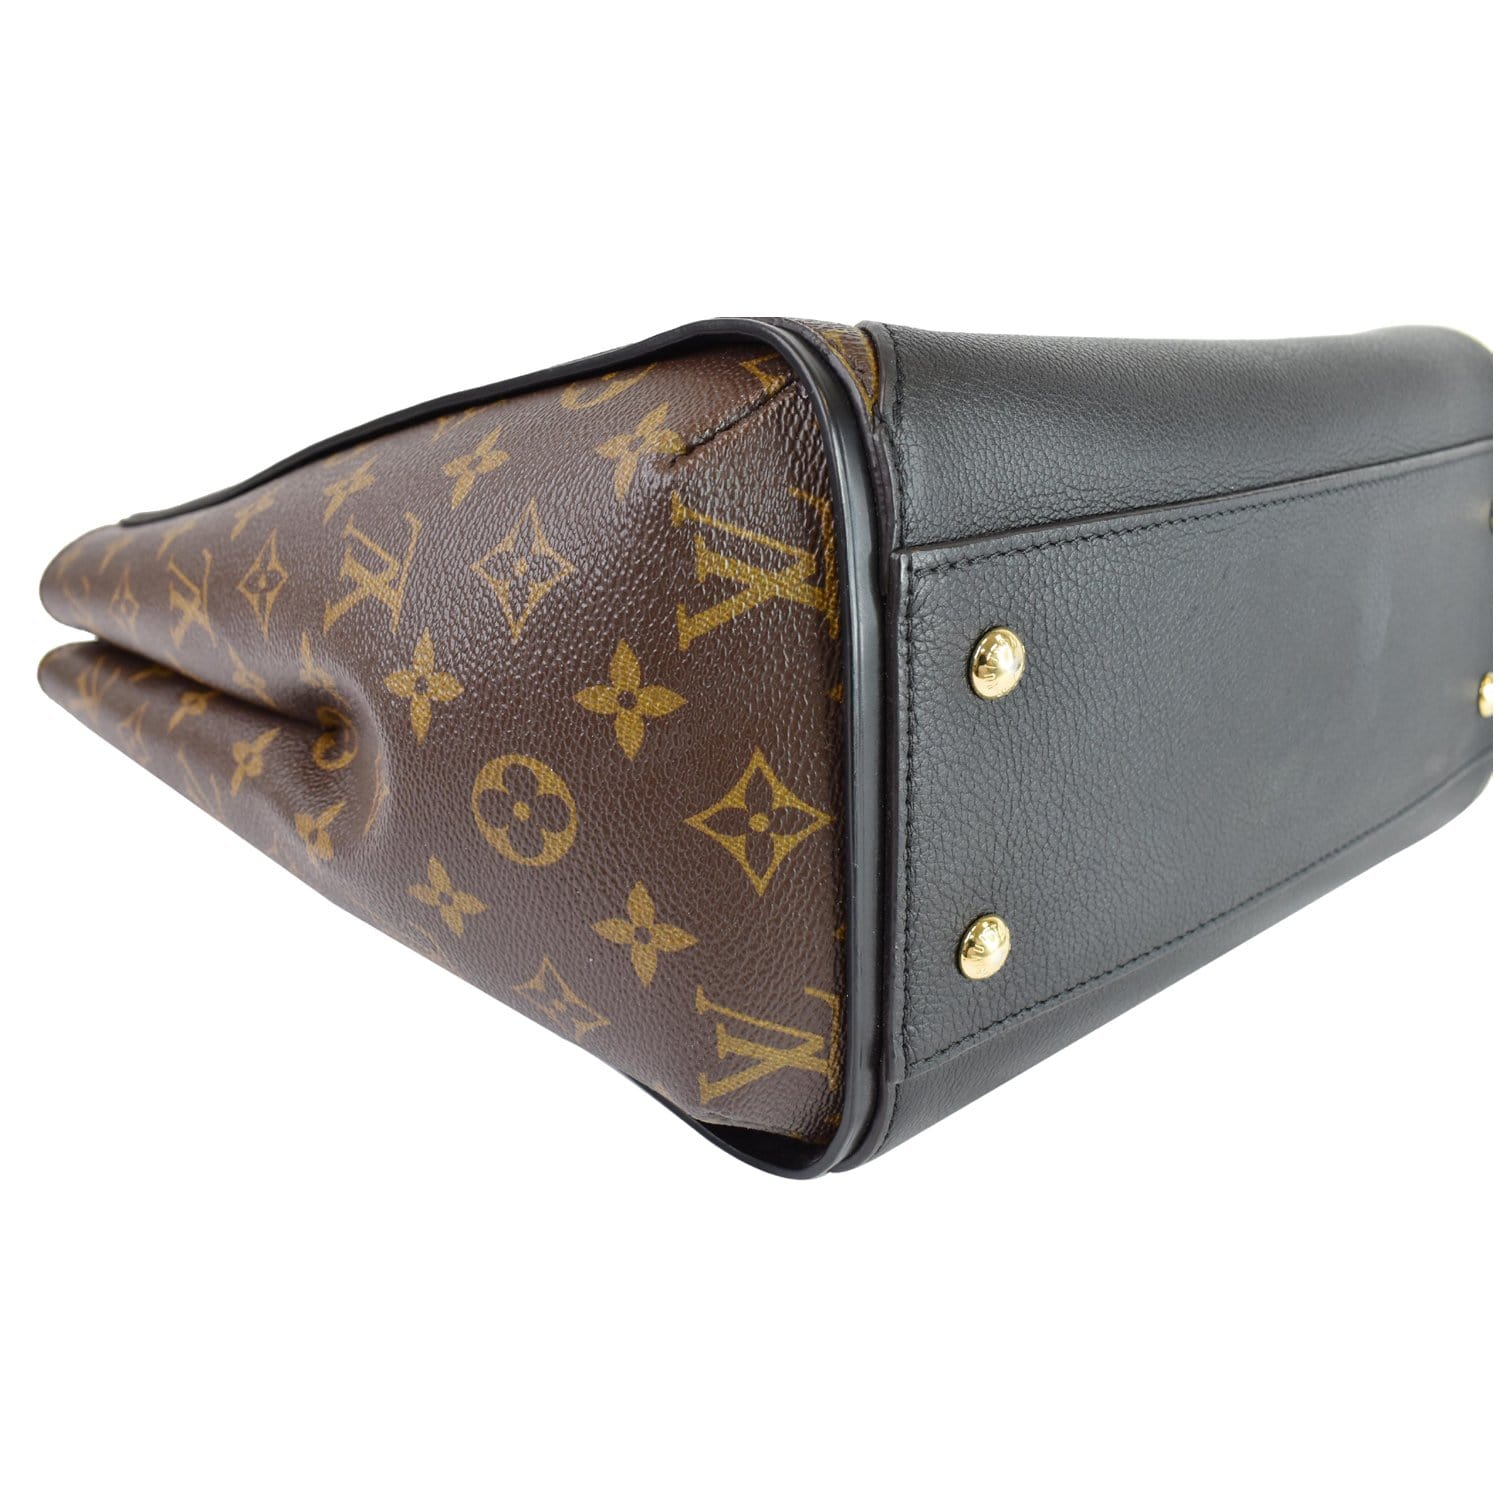 TOTALLY OBSESSED! New Louis Vuitton “Garden” Handbag Collection